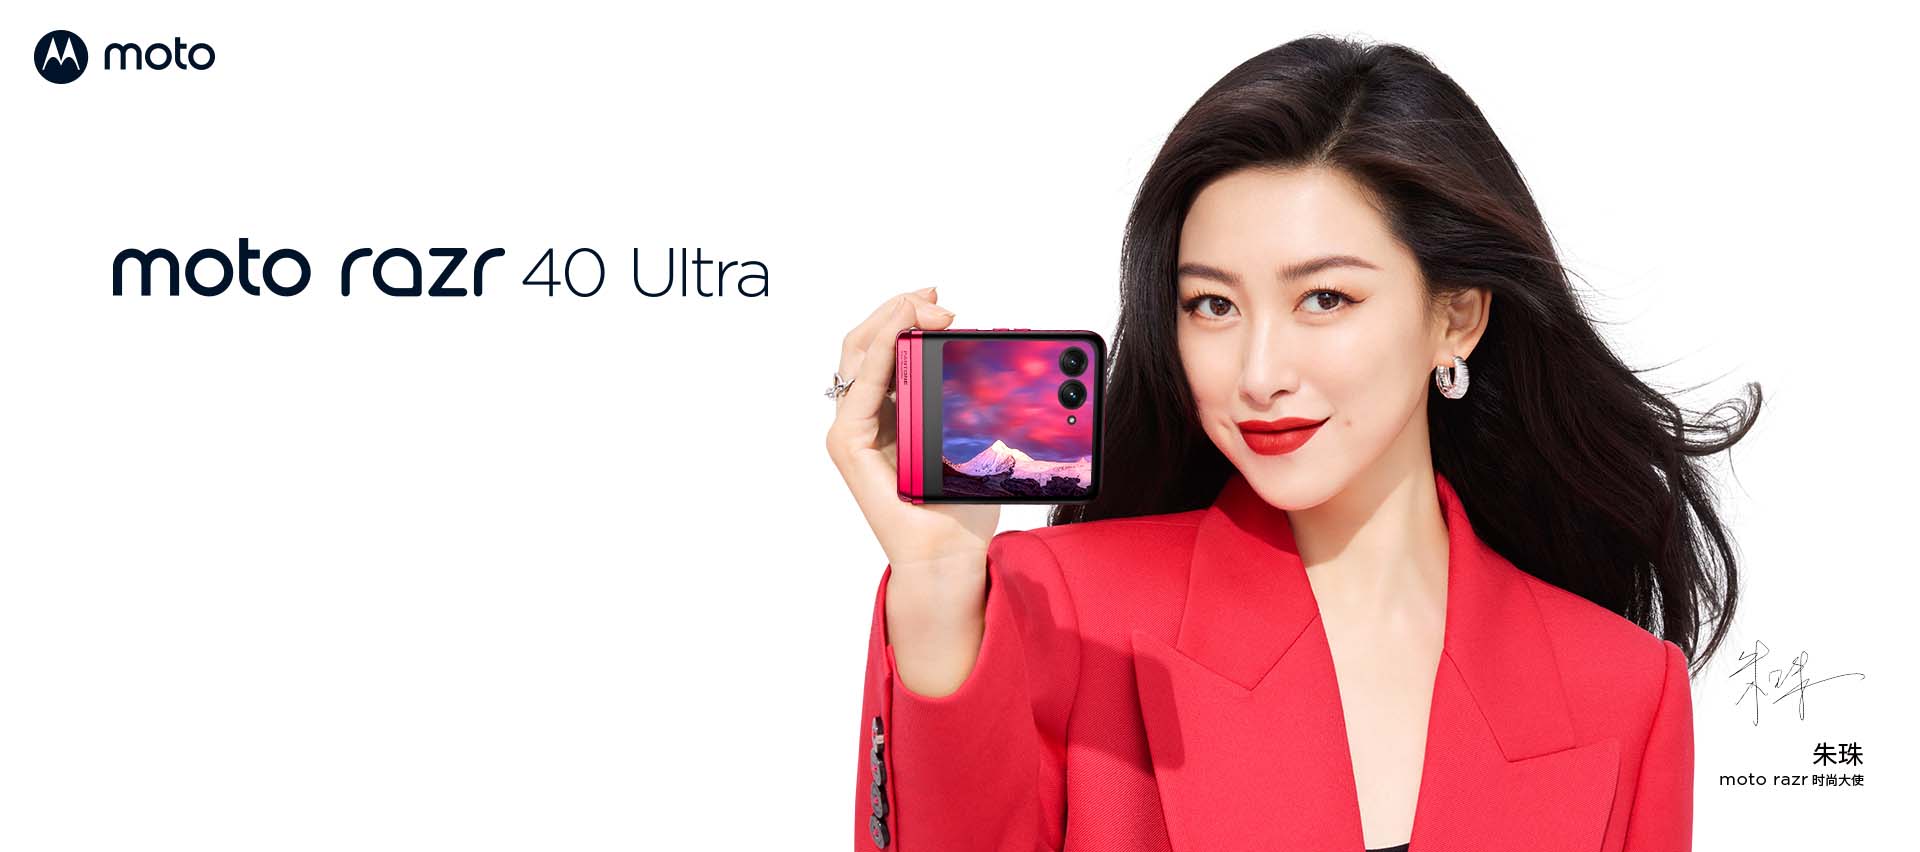 Motorola Razr 40 Ultra Review & Specification & Price